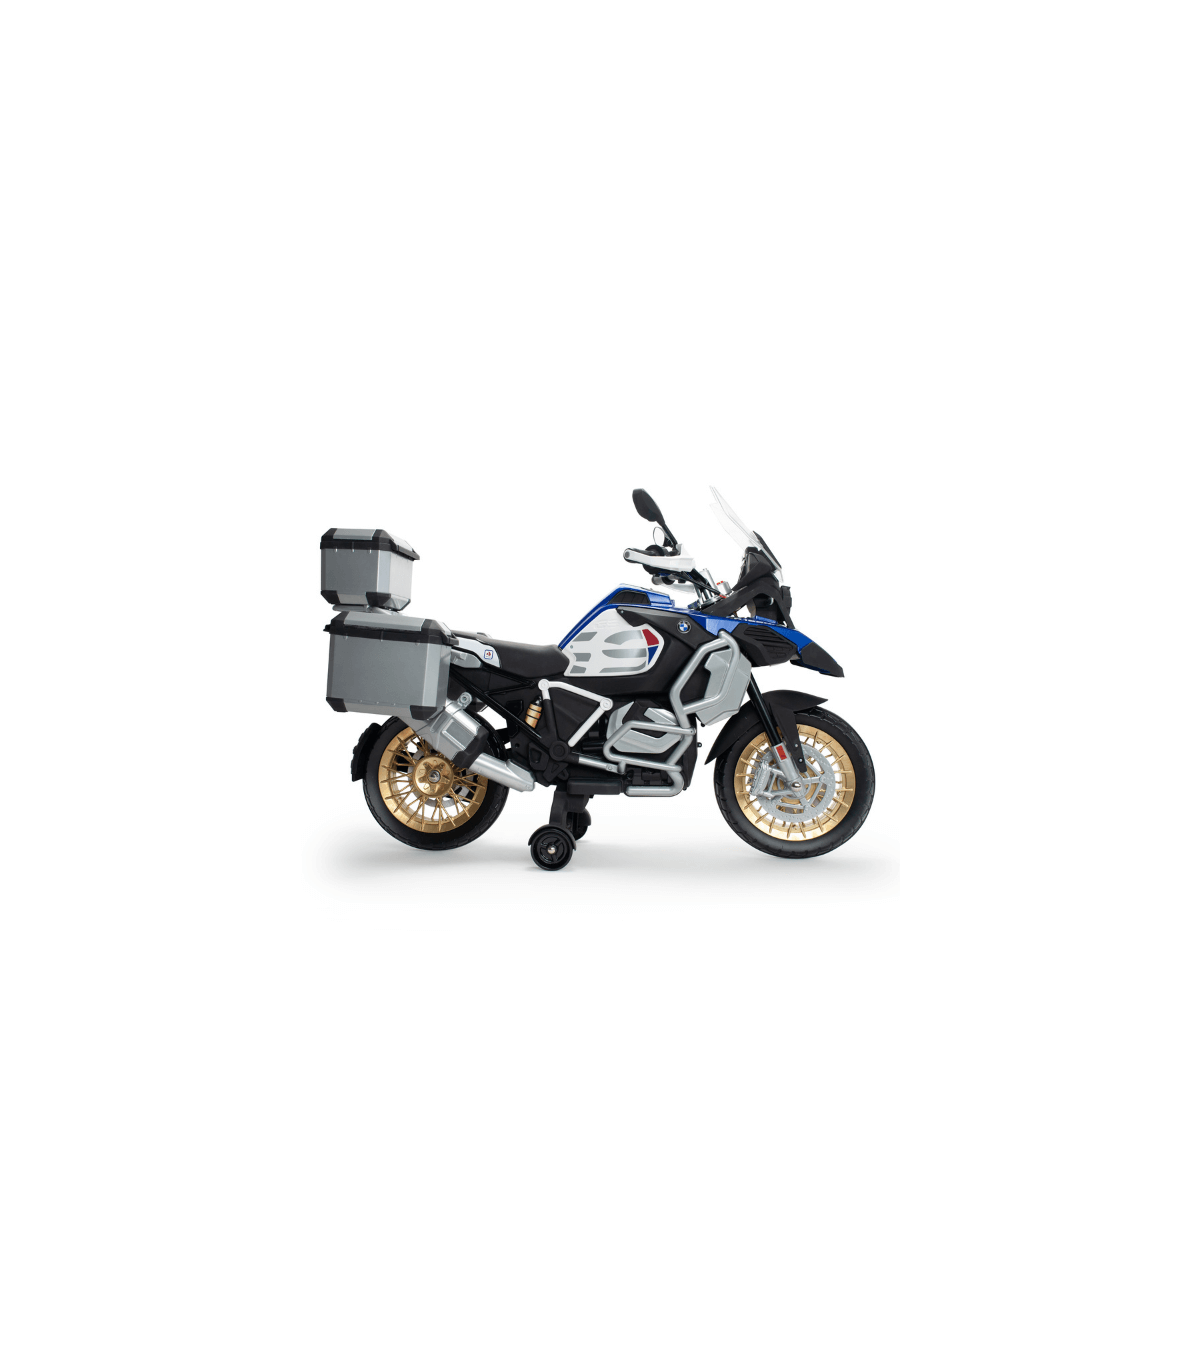 MOTO BMW ADVENTURE 1250 12 V CON MALETAS 651 - V49122